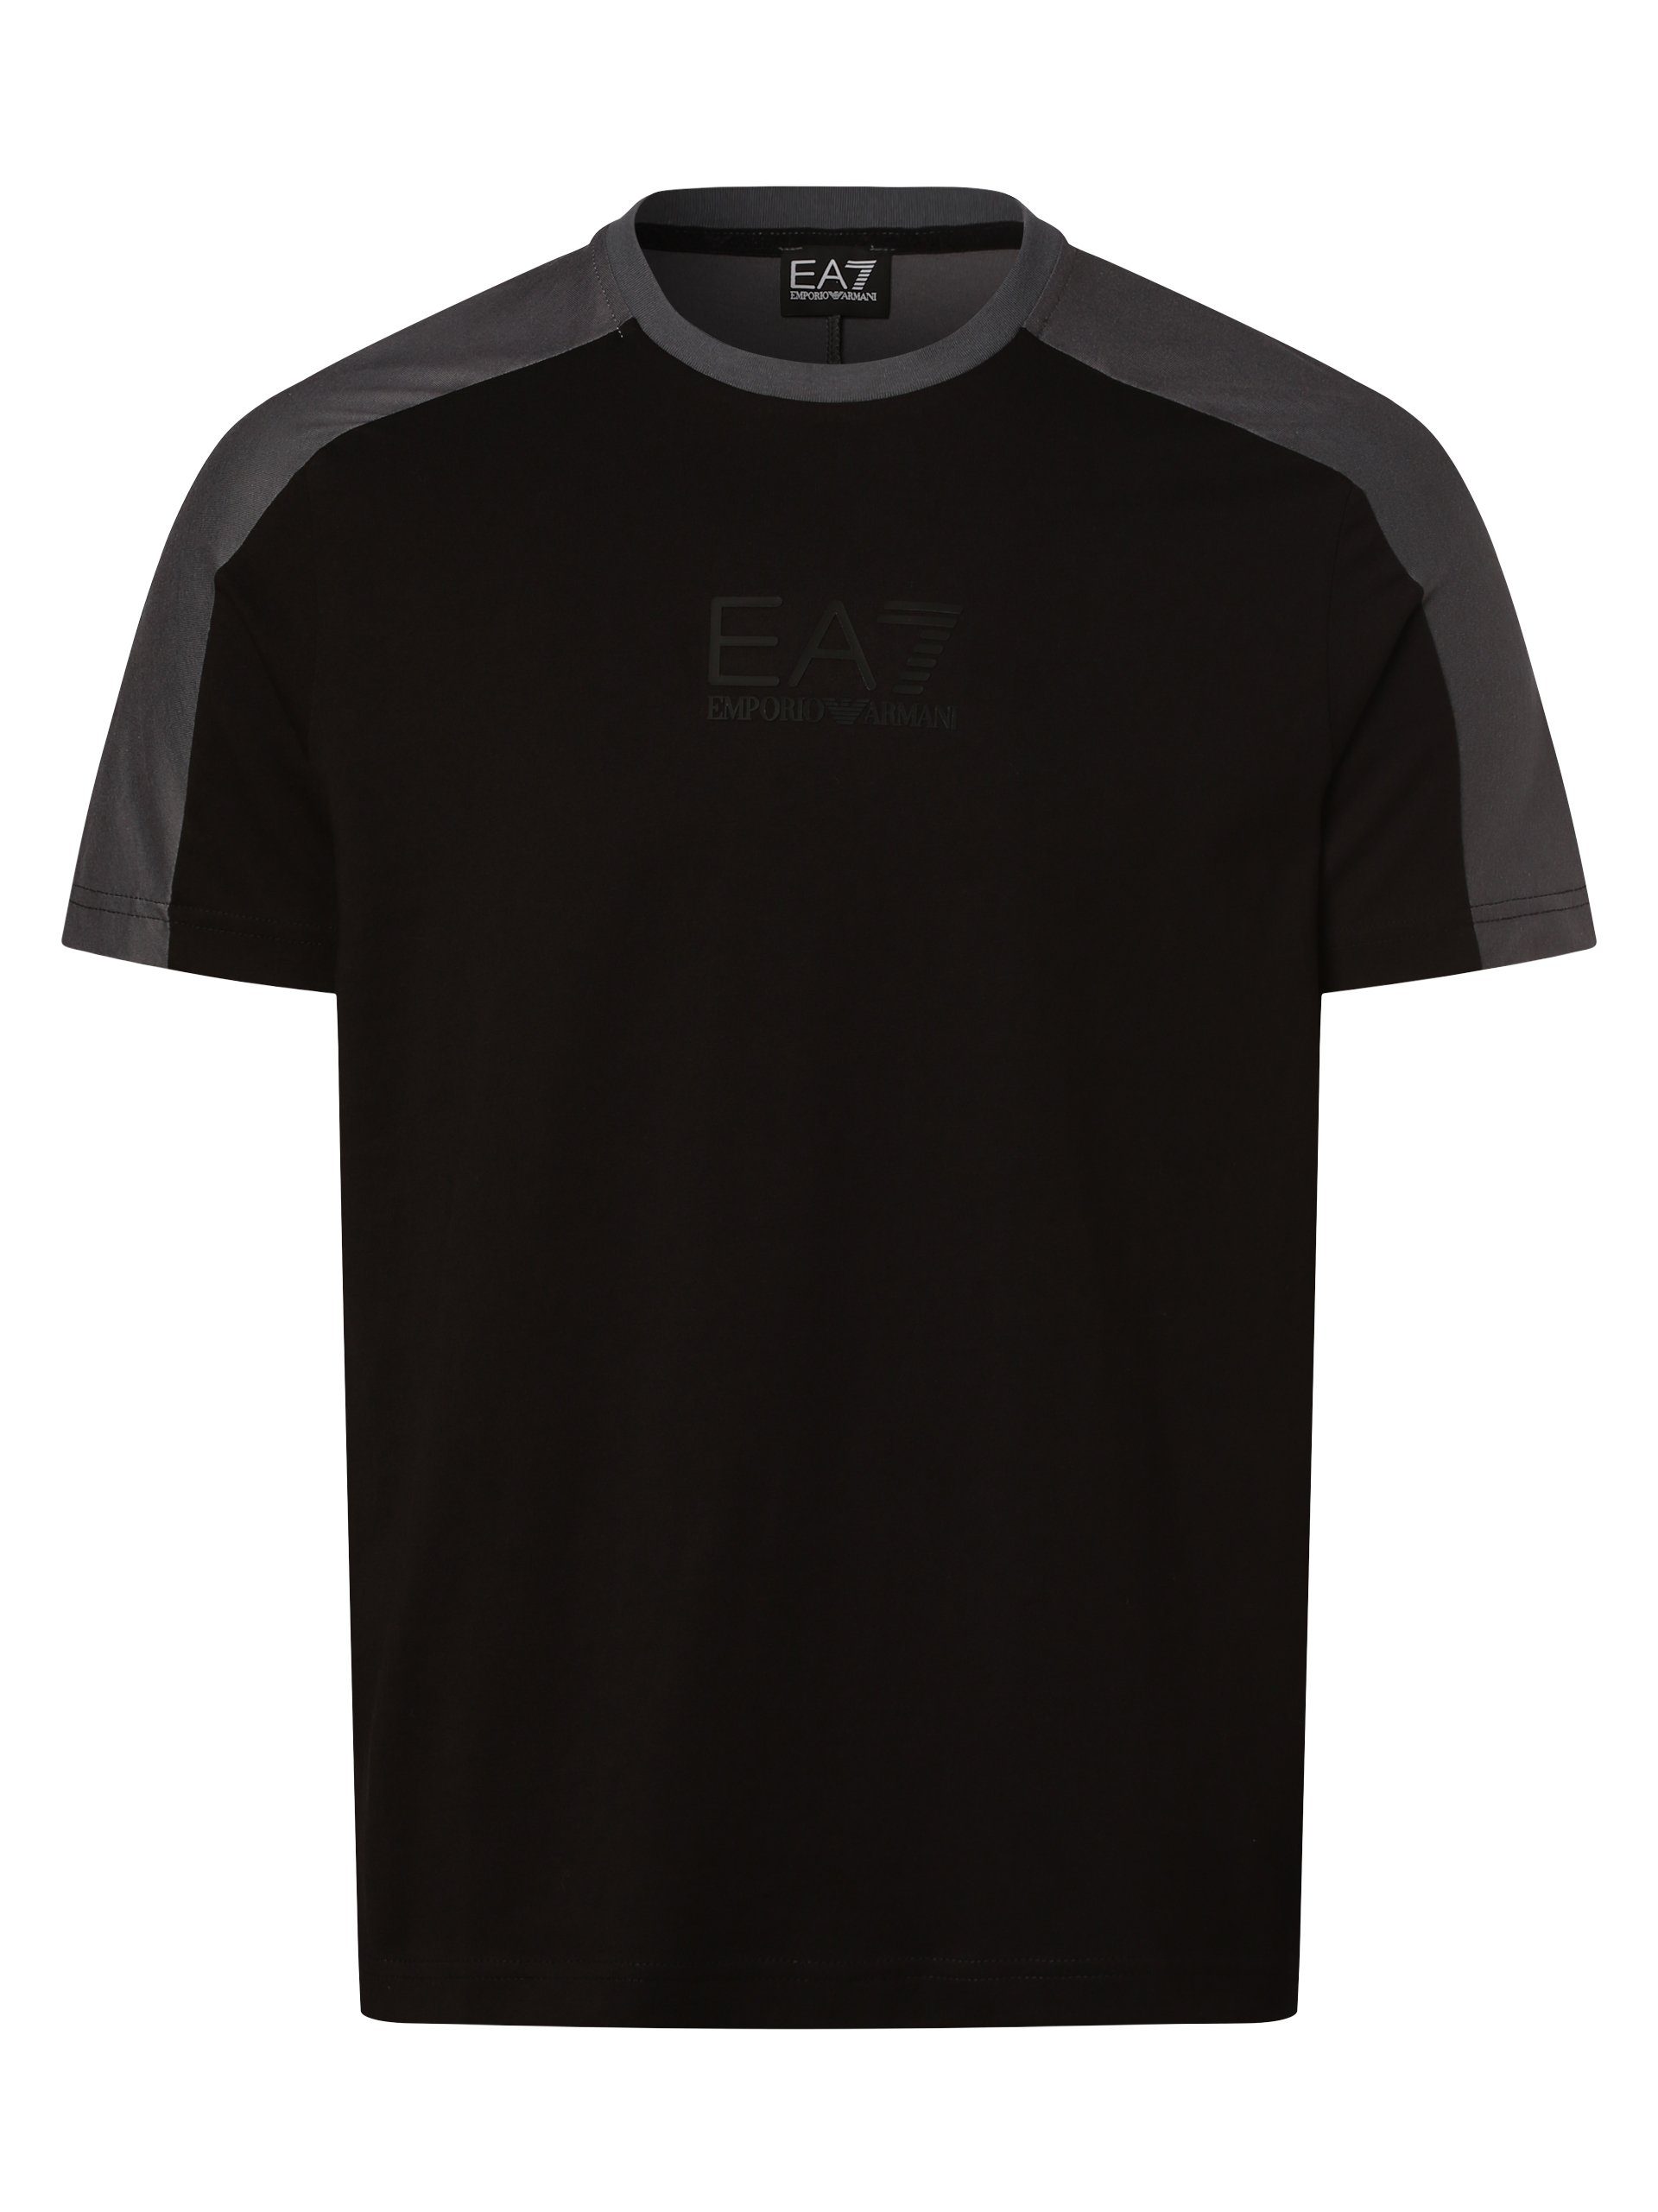 Emporio Armani T-Shirt schwarz grau